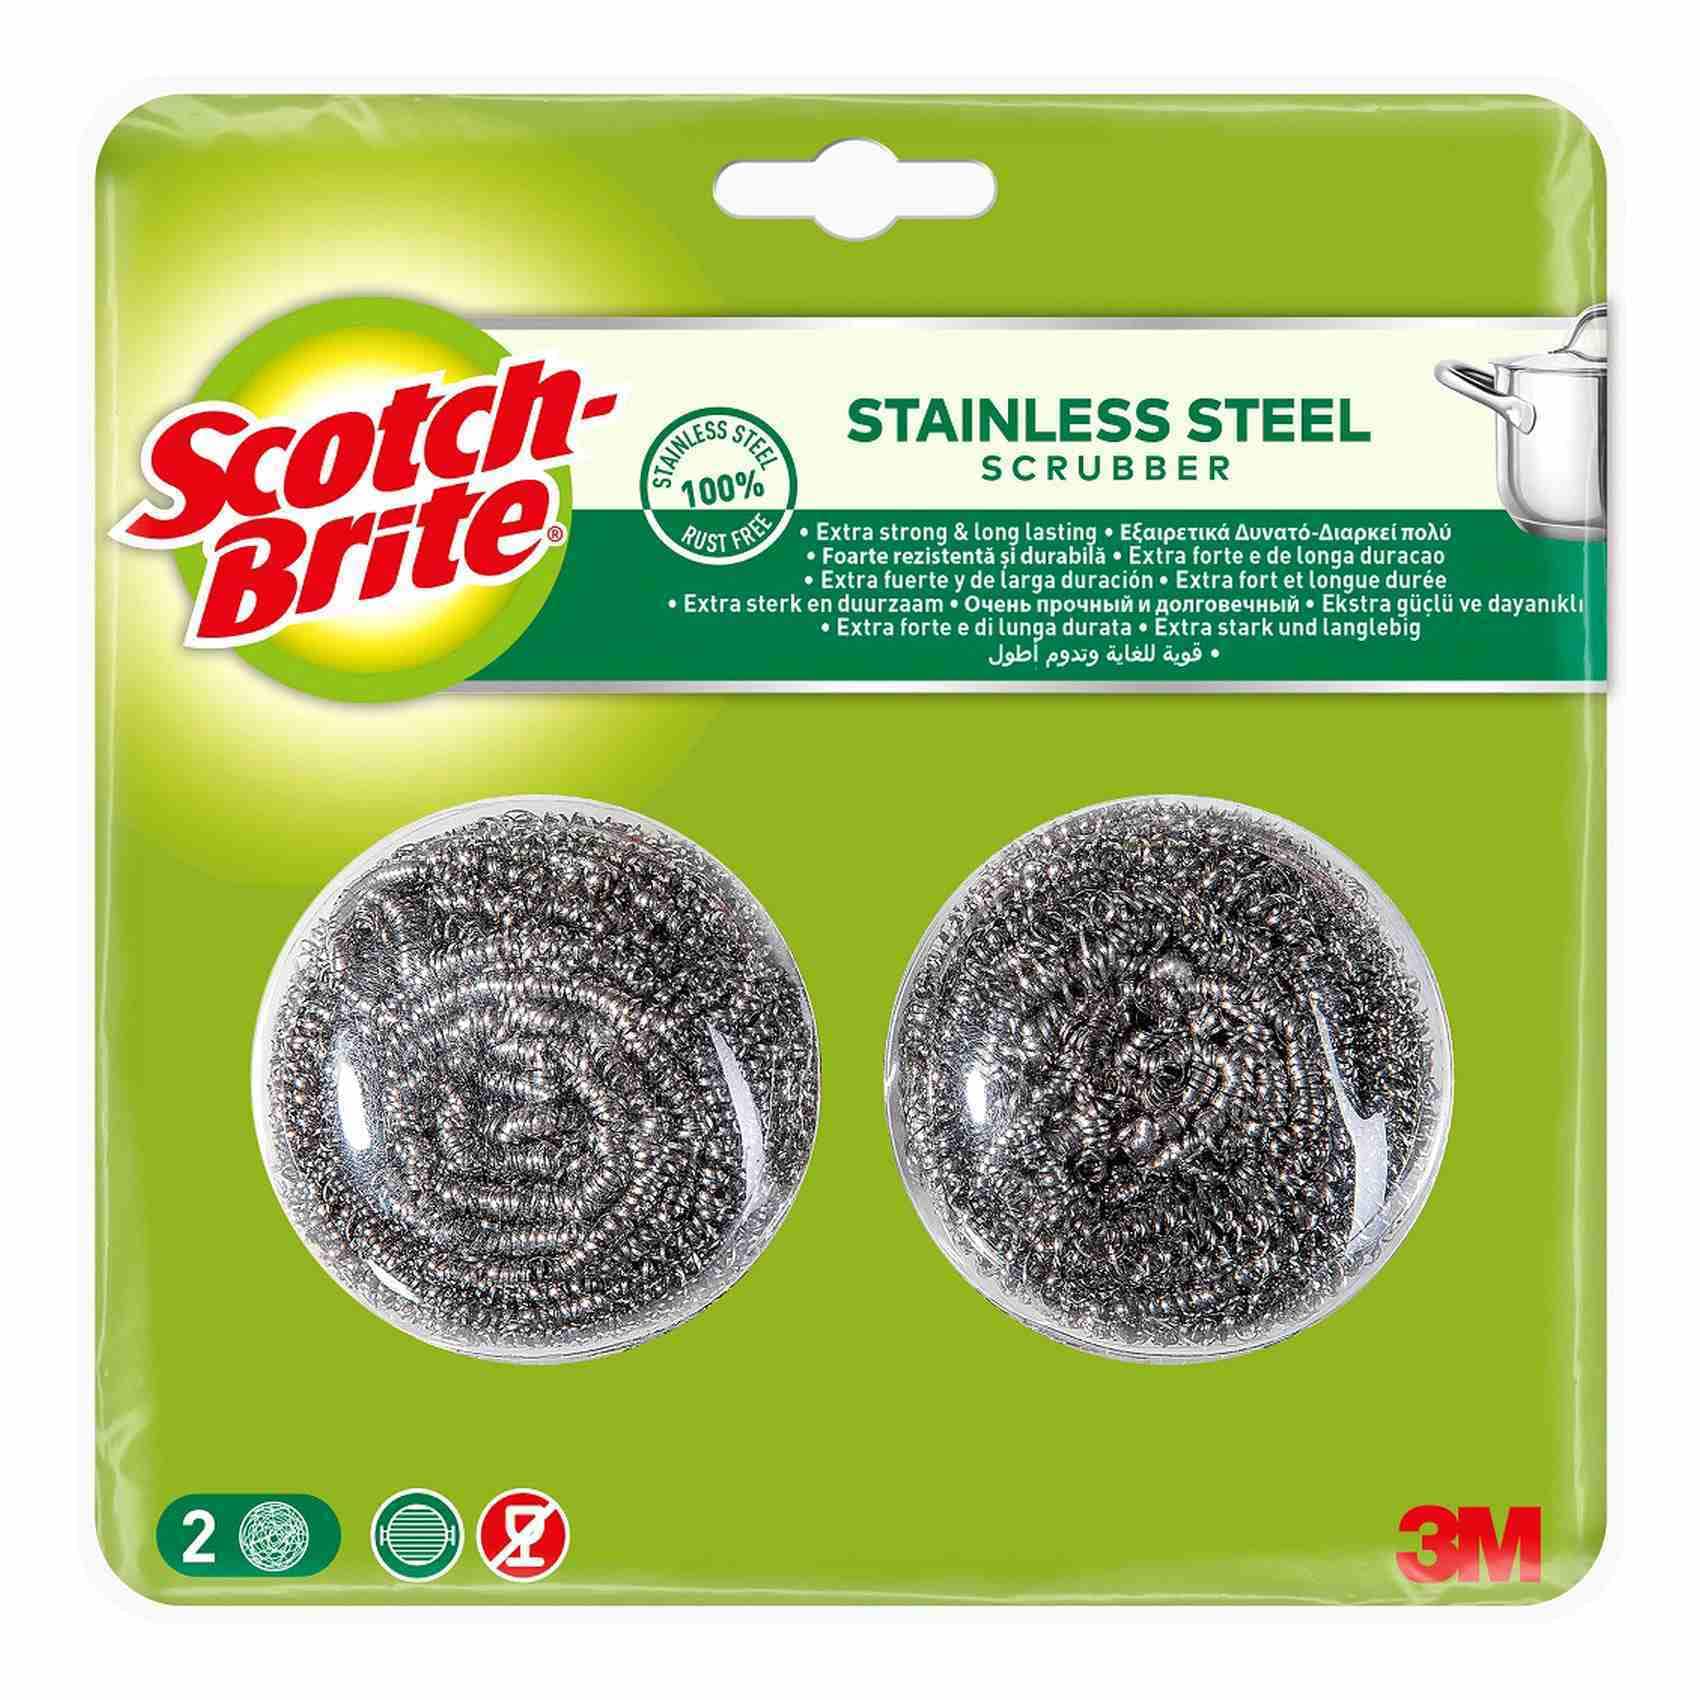 Buy Scotch-Brite Stainless Steel Metal Spiral Scrubber Scouring